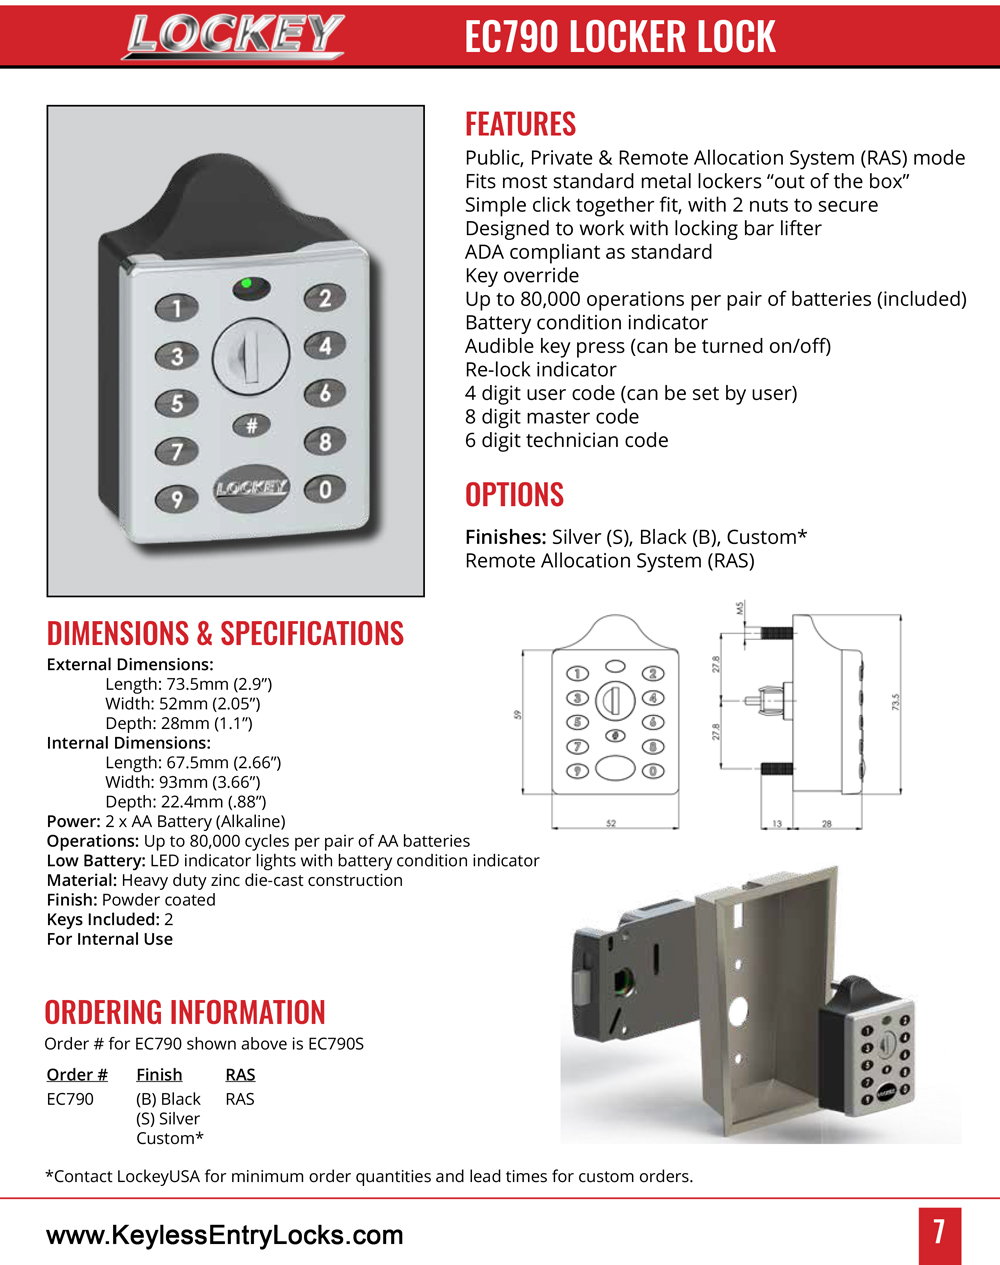 Lockey EC-790 Electronic Locker Lock